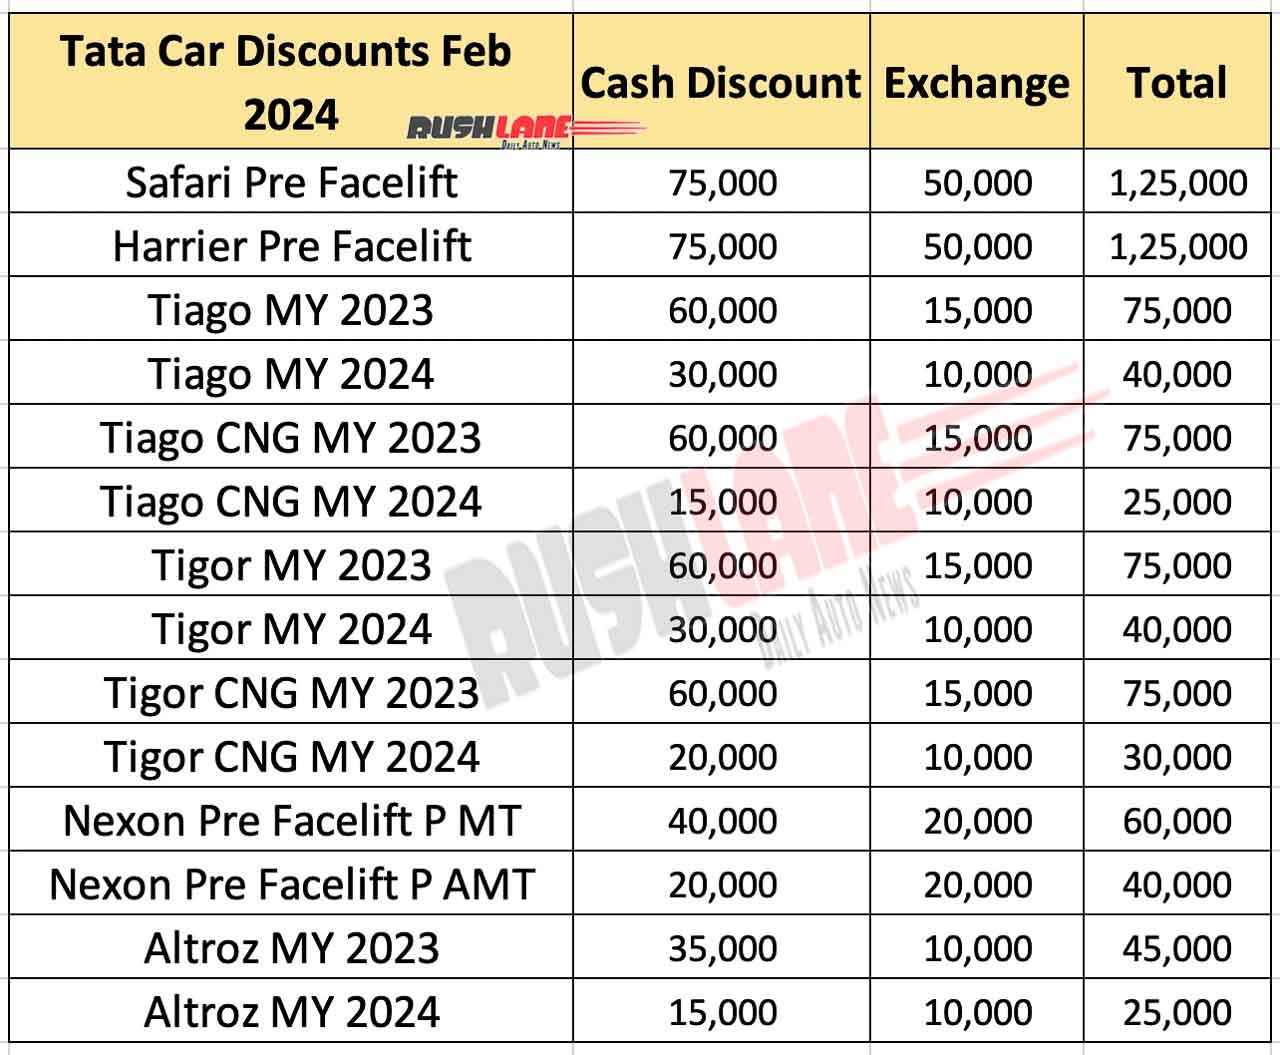 Tata car discounts Feb 2024